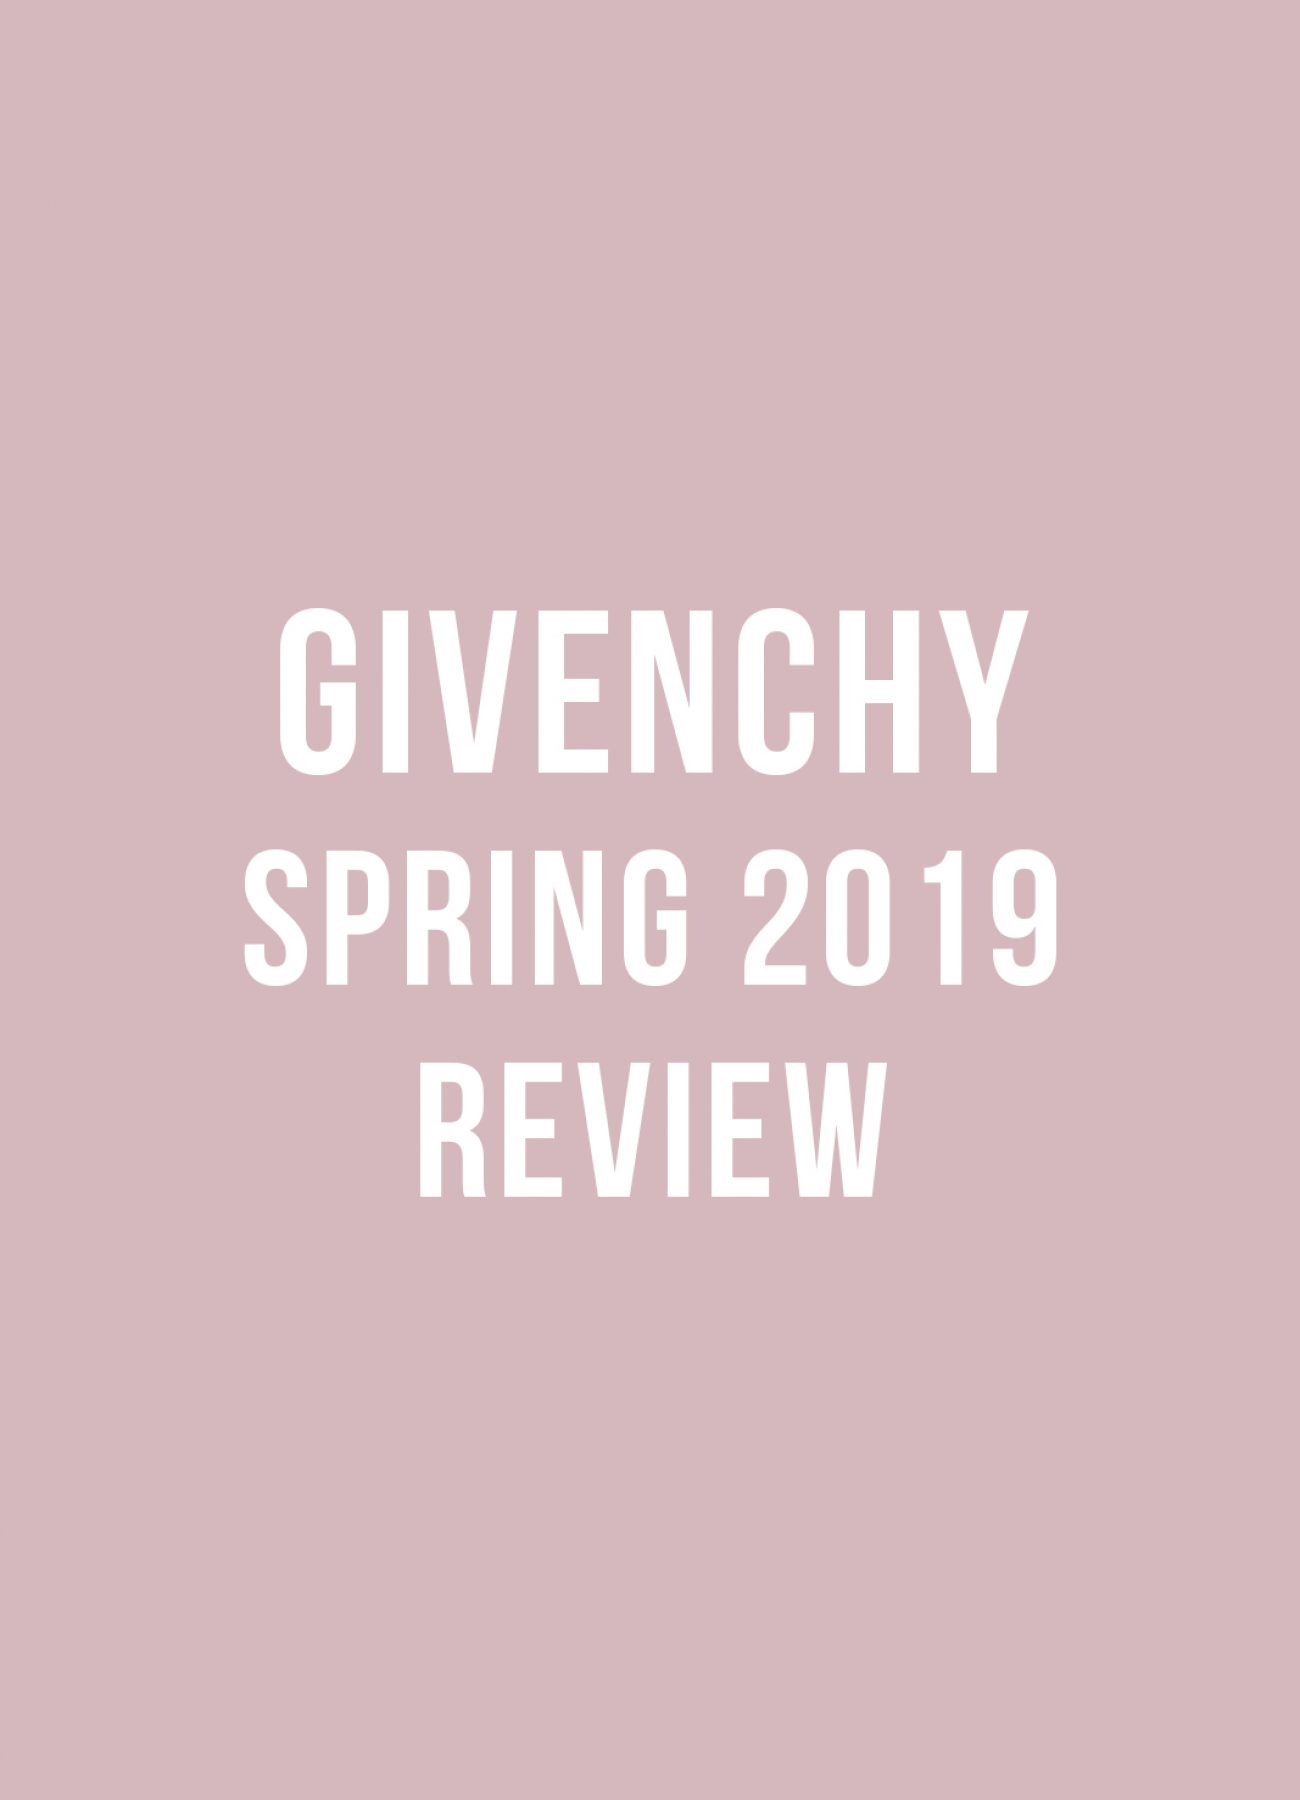 Givenchy spring 2019